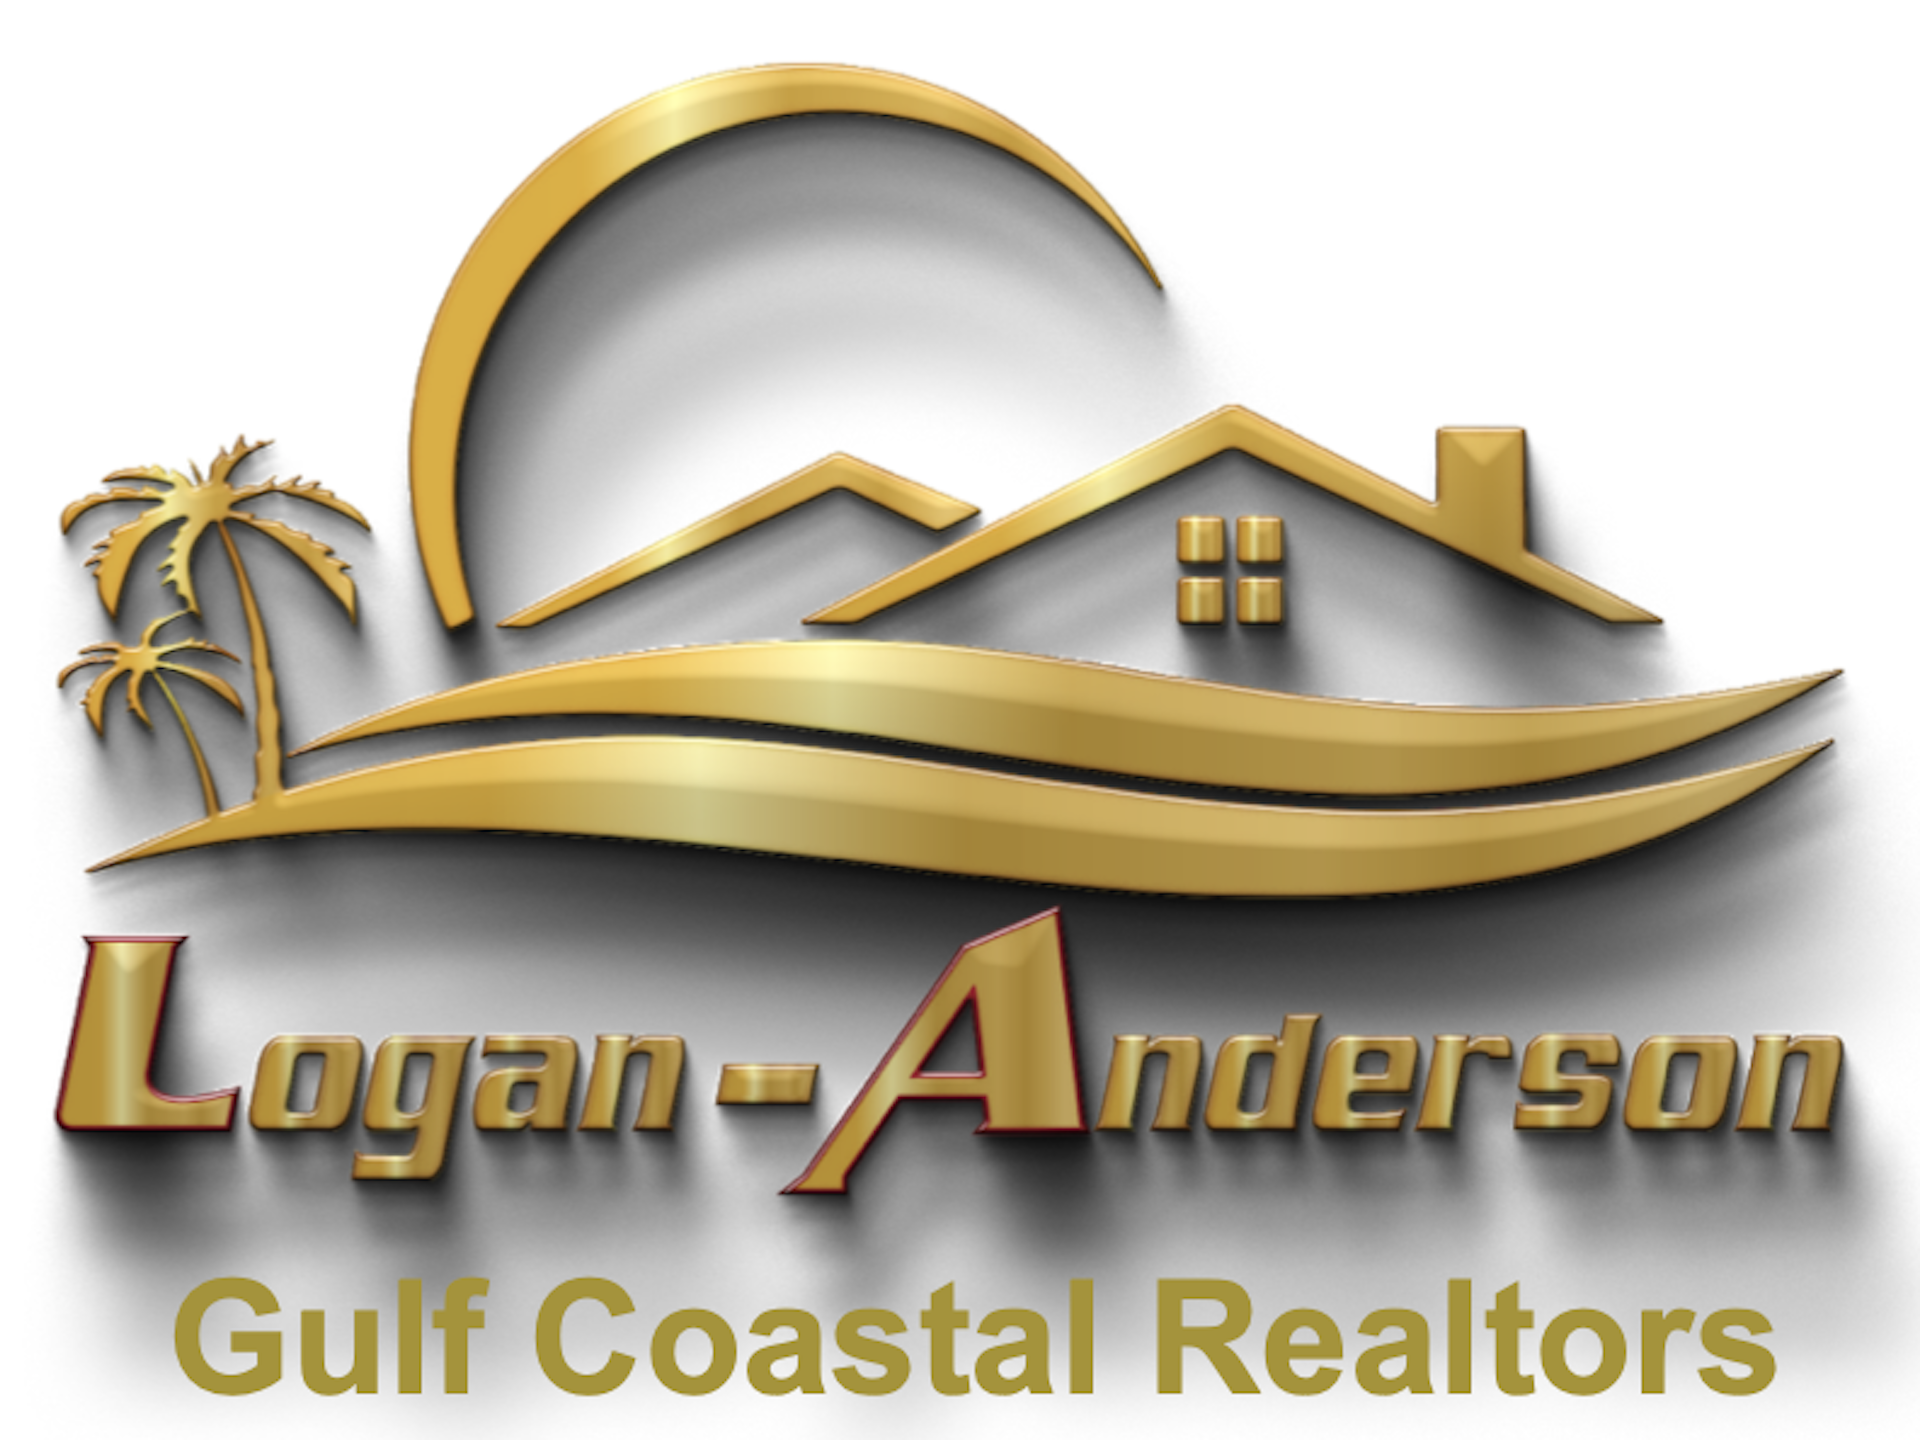 Logan-Anderson Gulf Coastal Realty